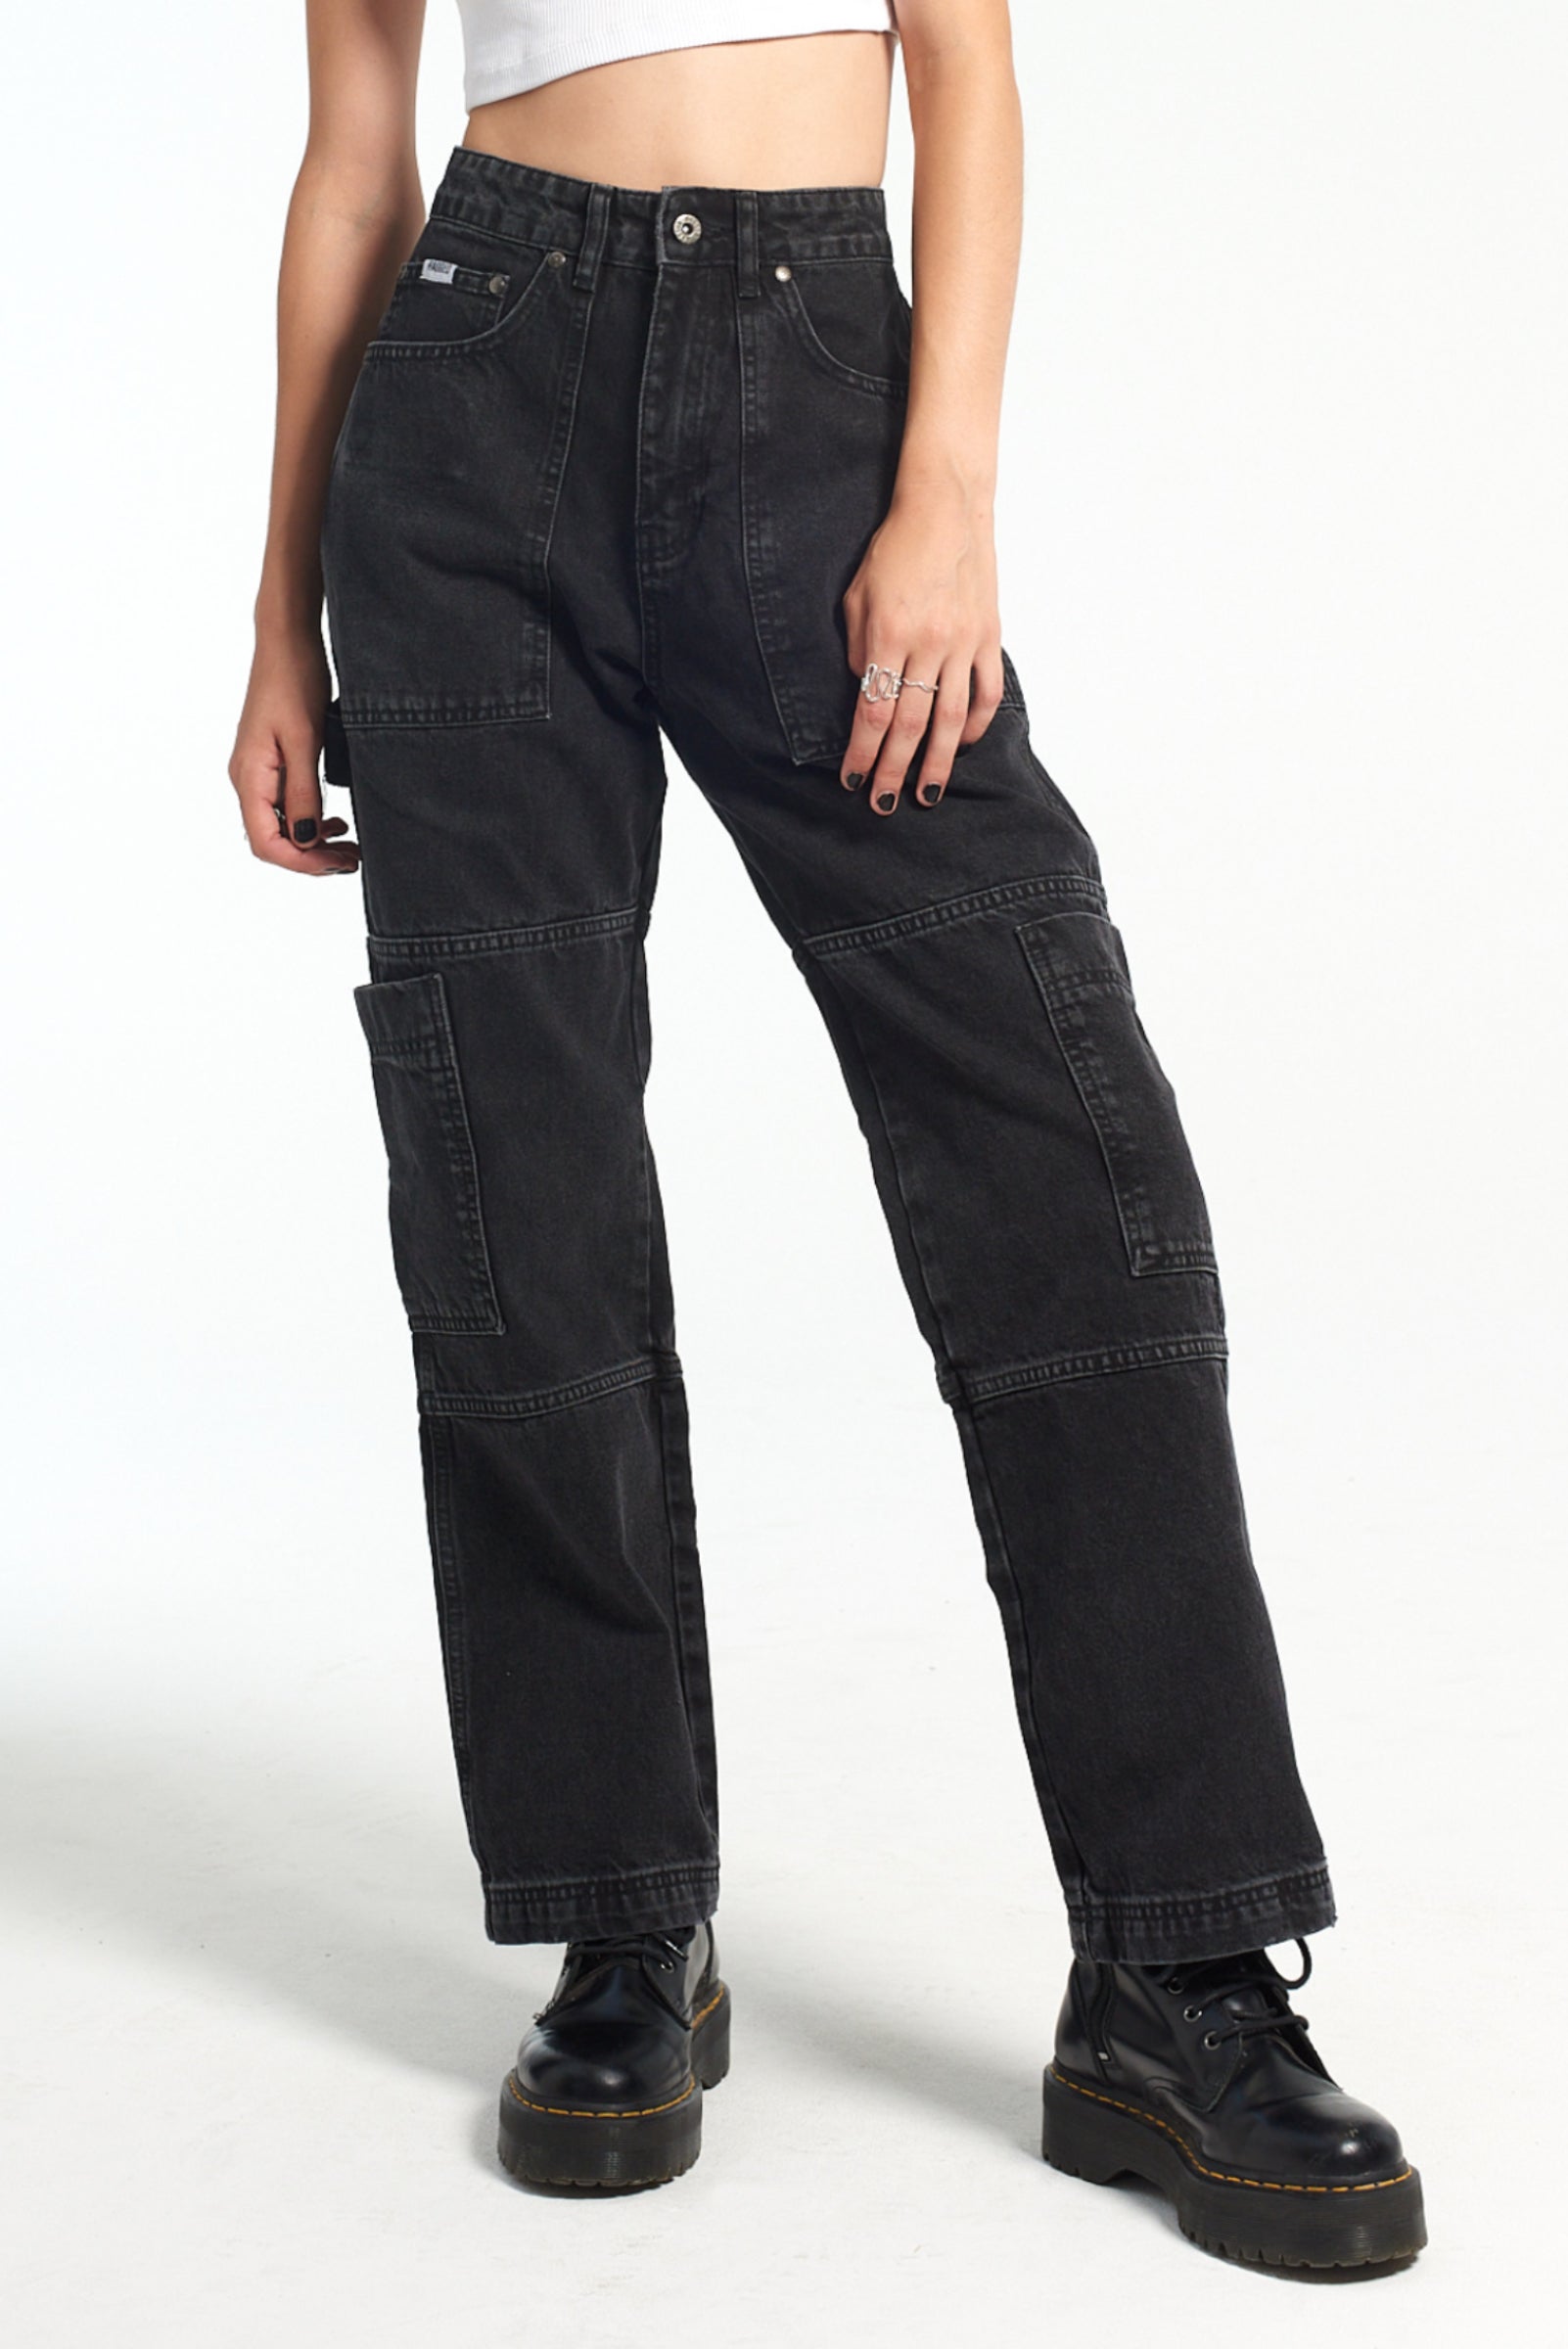 BRAND KRUZE Mens Cargo Combat Denim Jeans KZ103 Work Trousers Pants All  Waist Sizes BLK 30 R : Amazon.co.uk: Fashion